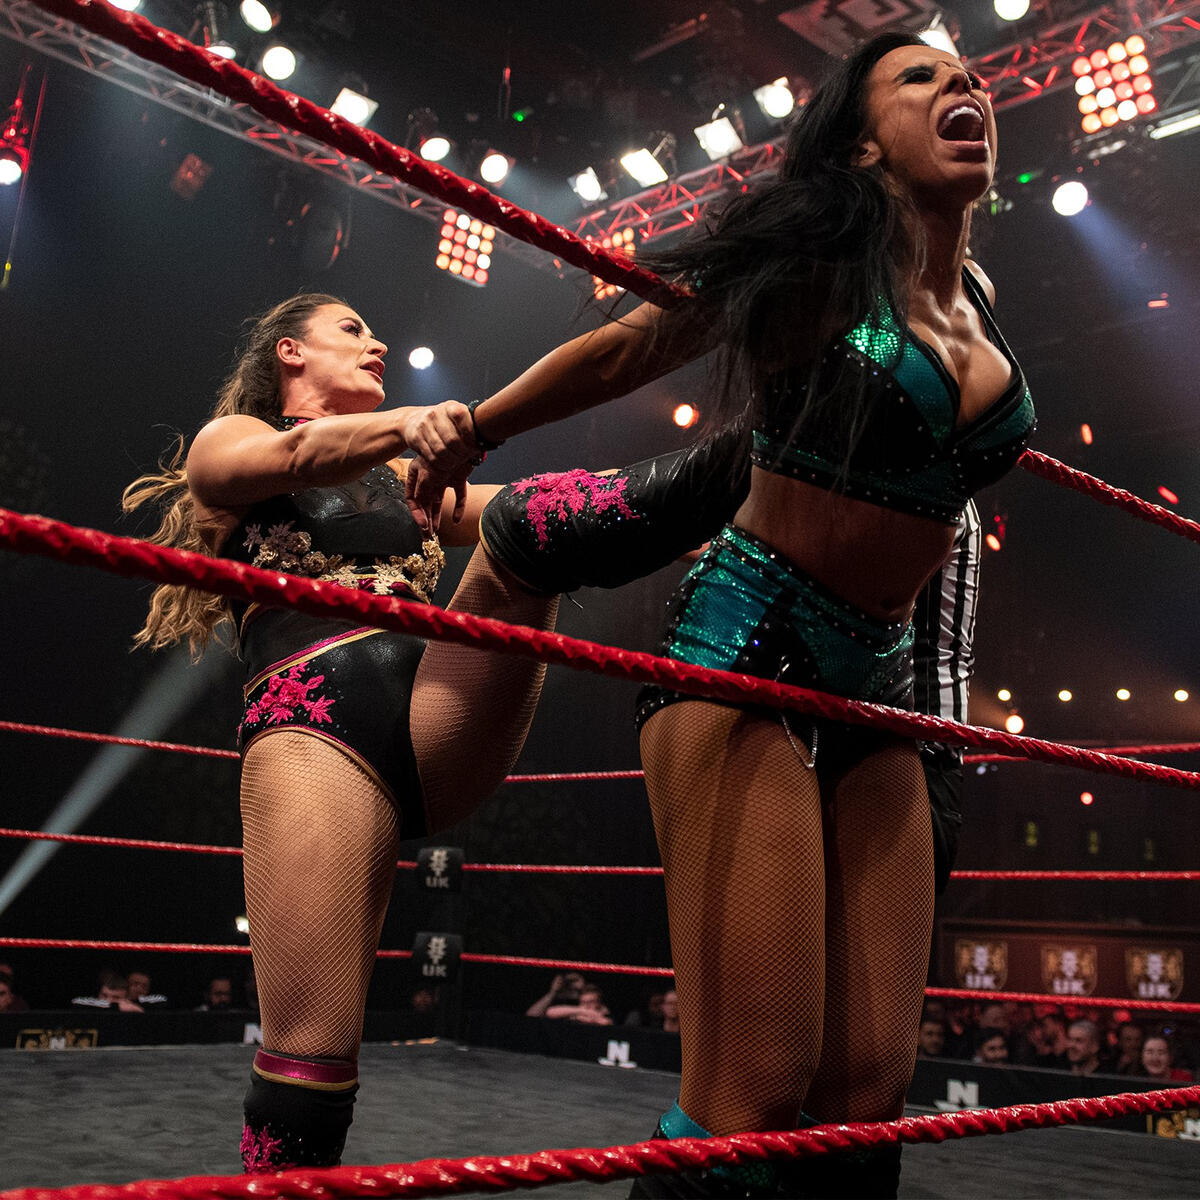 Fightful Wrestling on X: Becky Lynch's render as NXT Women's Champion   / X